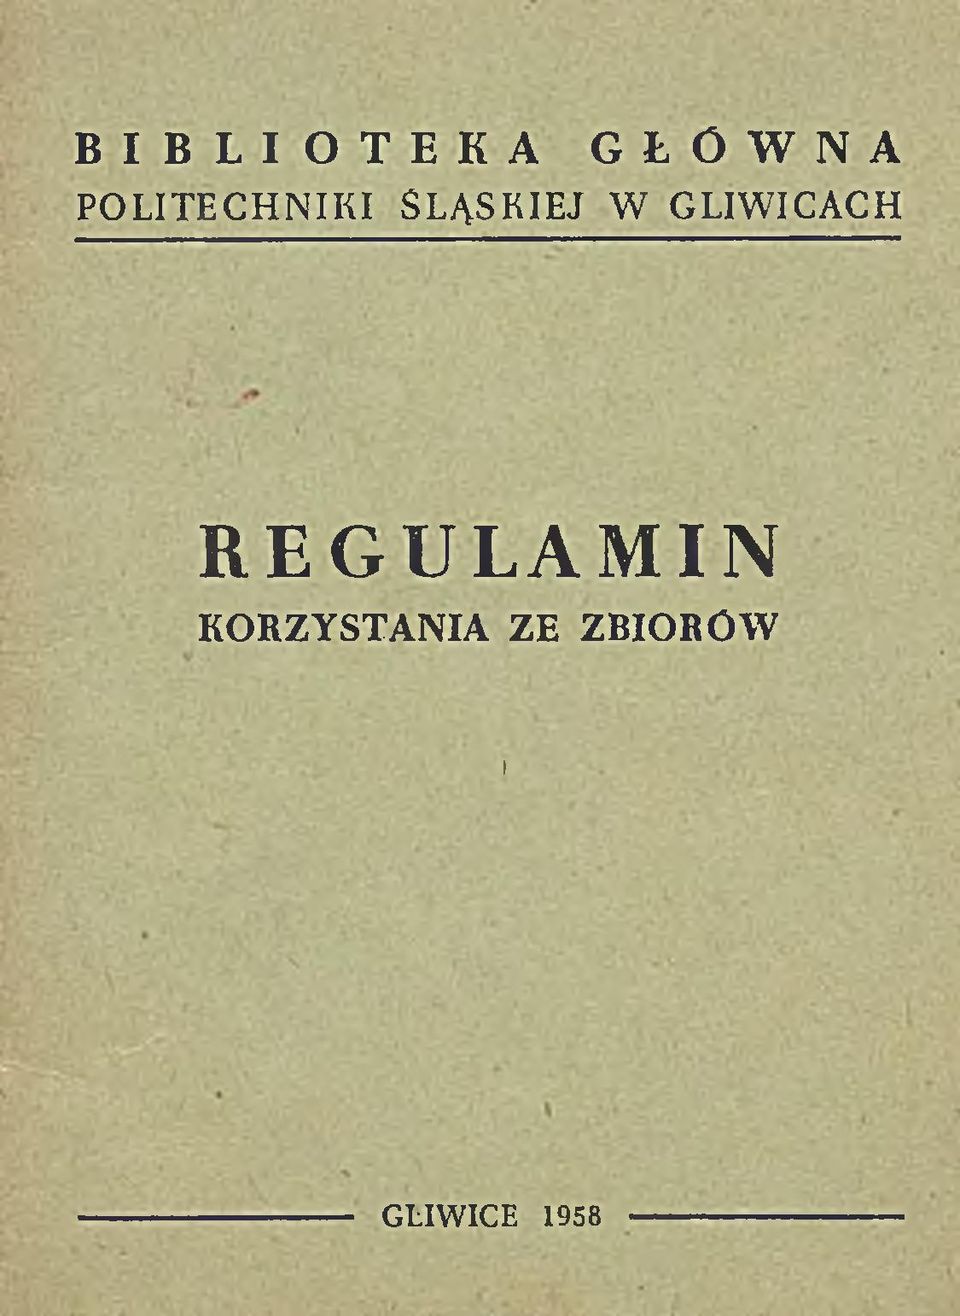 GLIWICACH REGULAMIN